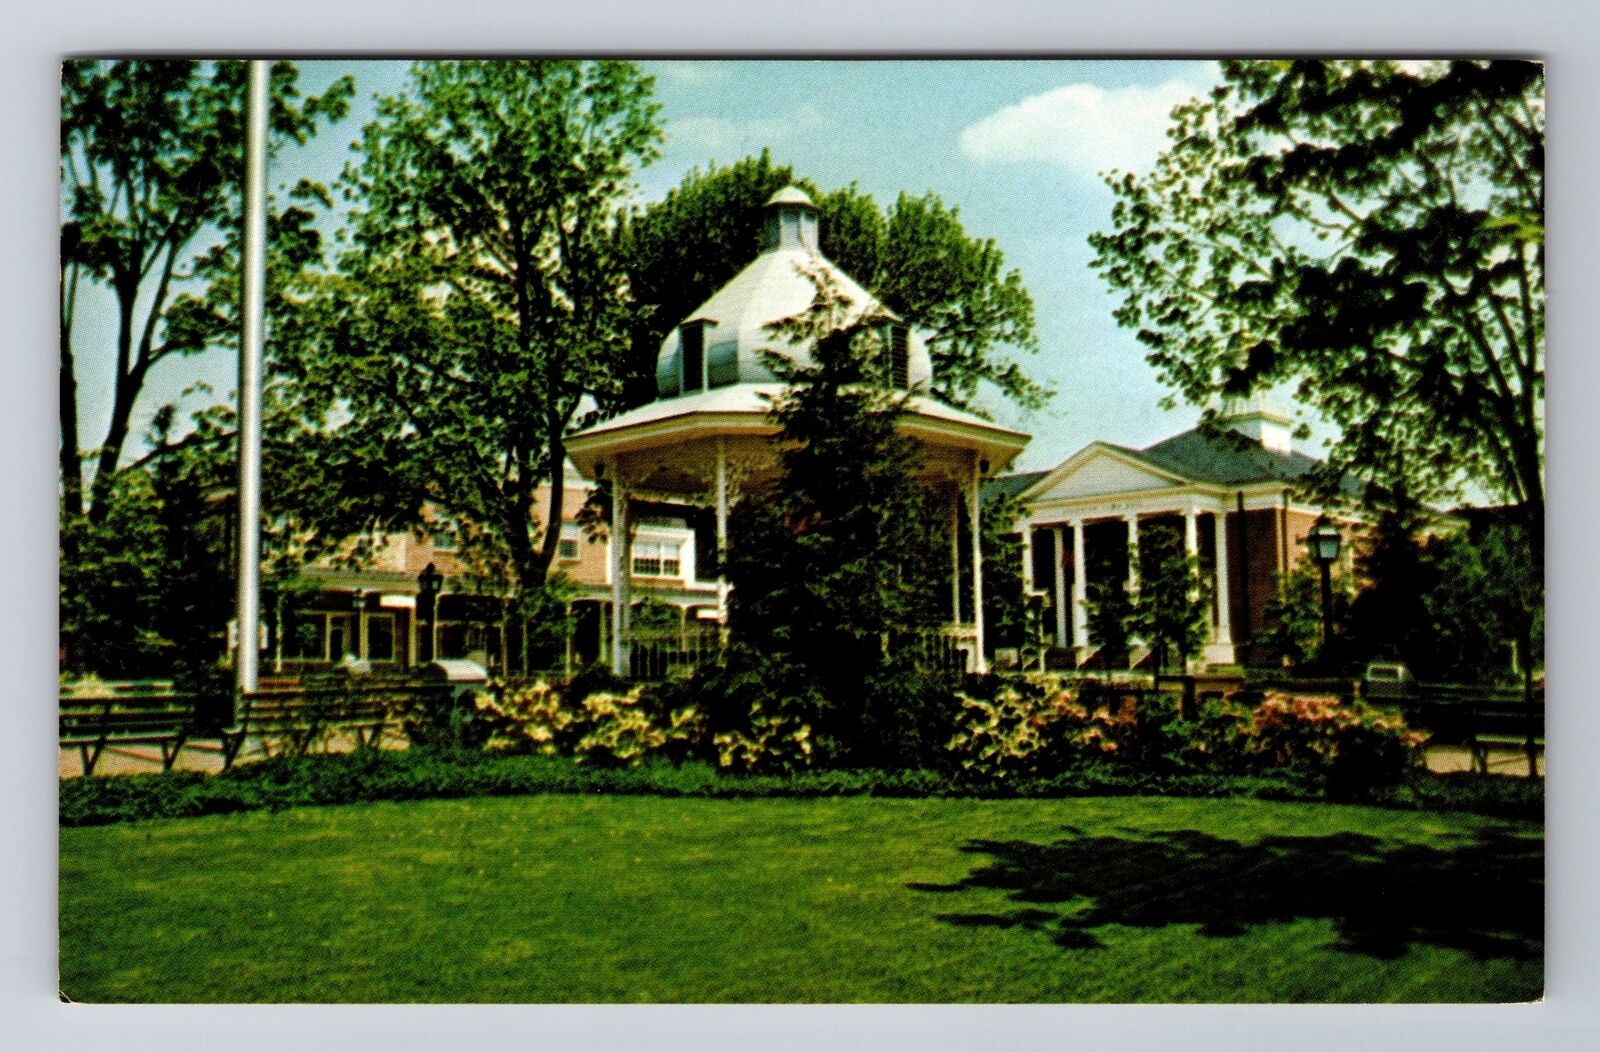 Ligonier PA- Pennsylvania, The Bandstand And Public Square, Vintage Postcard